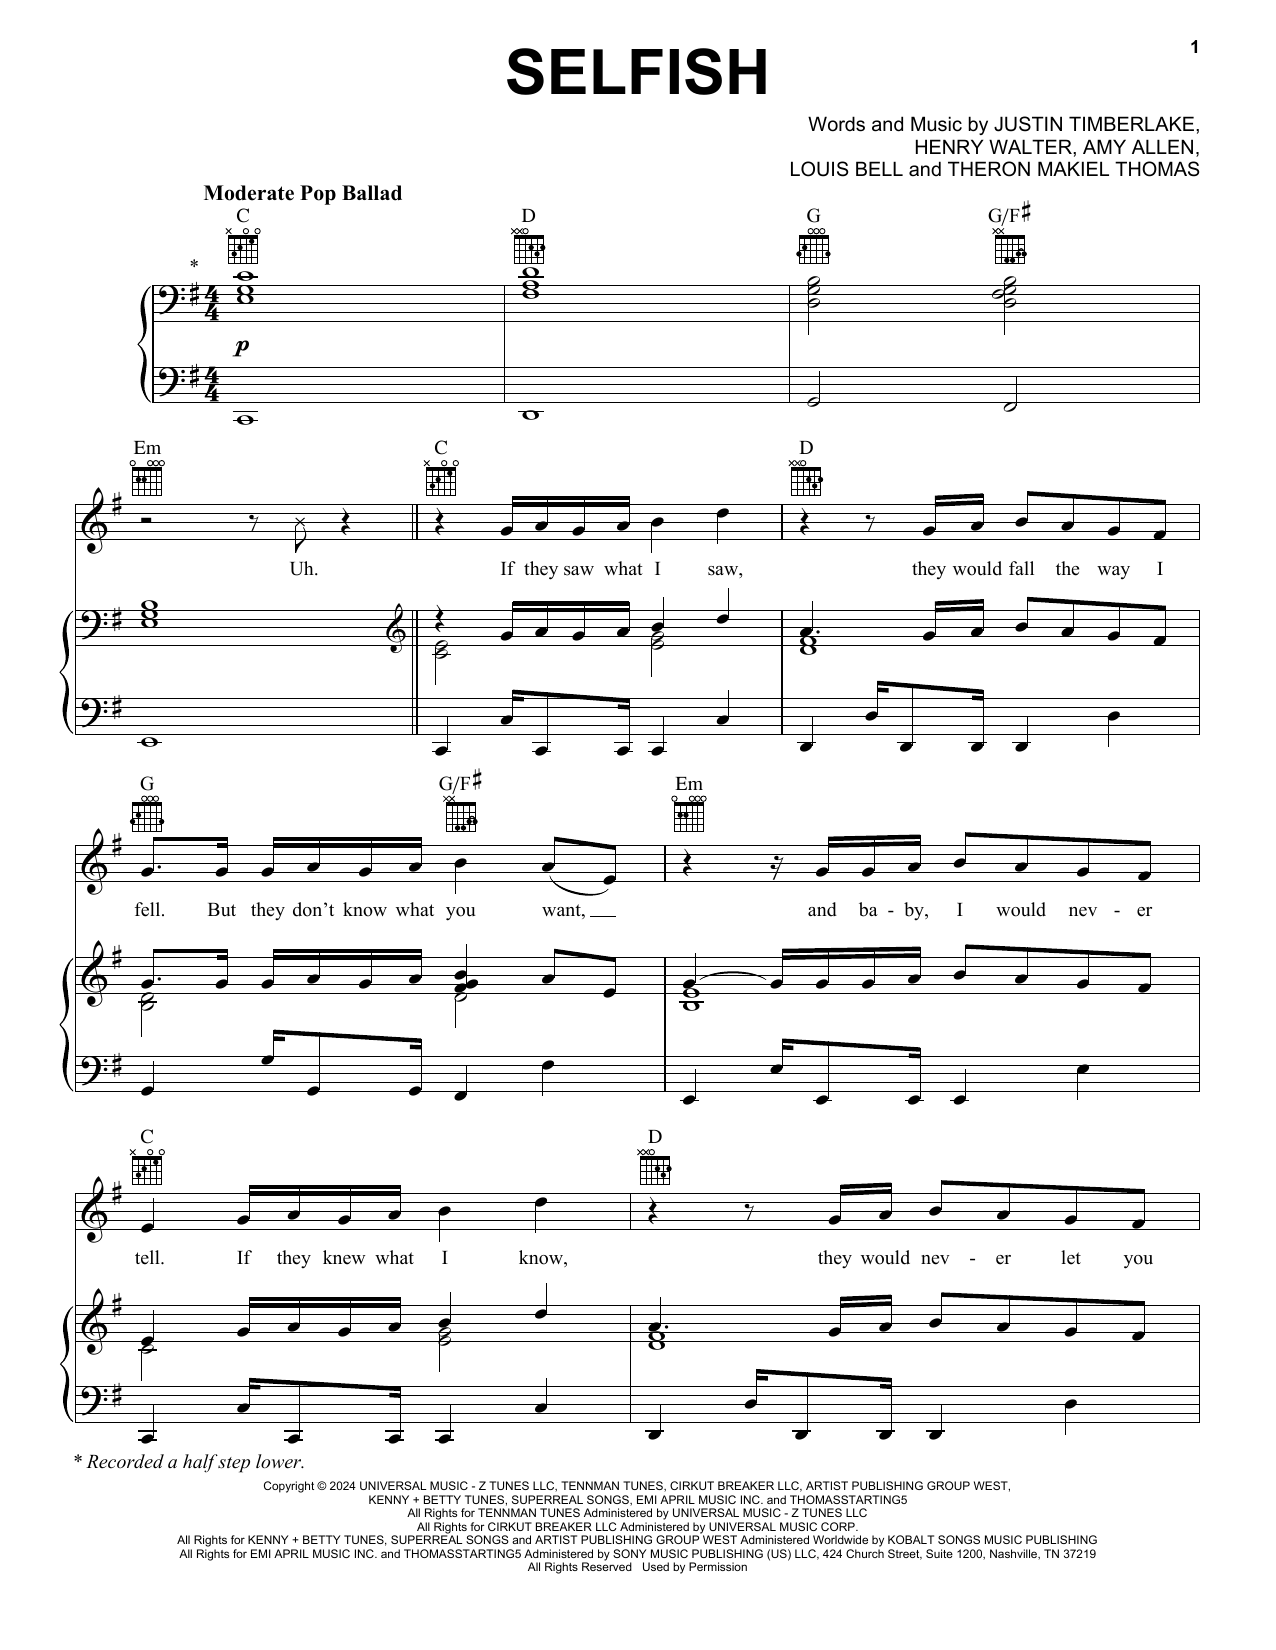 Justin Timberlake Selfish Sheet Music Notes & Chords for Piano, Vocal & Guitar Chords (Right-Hand Melody) - Download or Print PDF